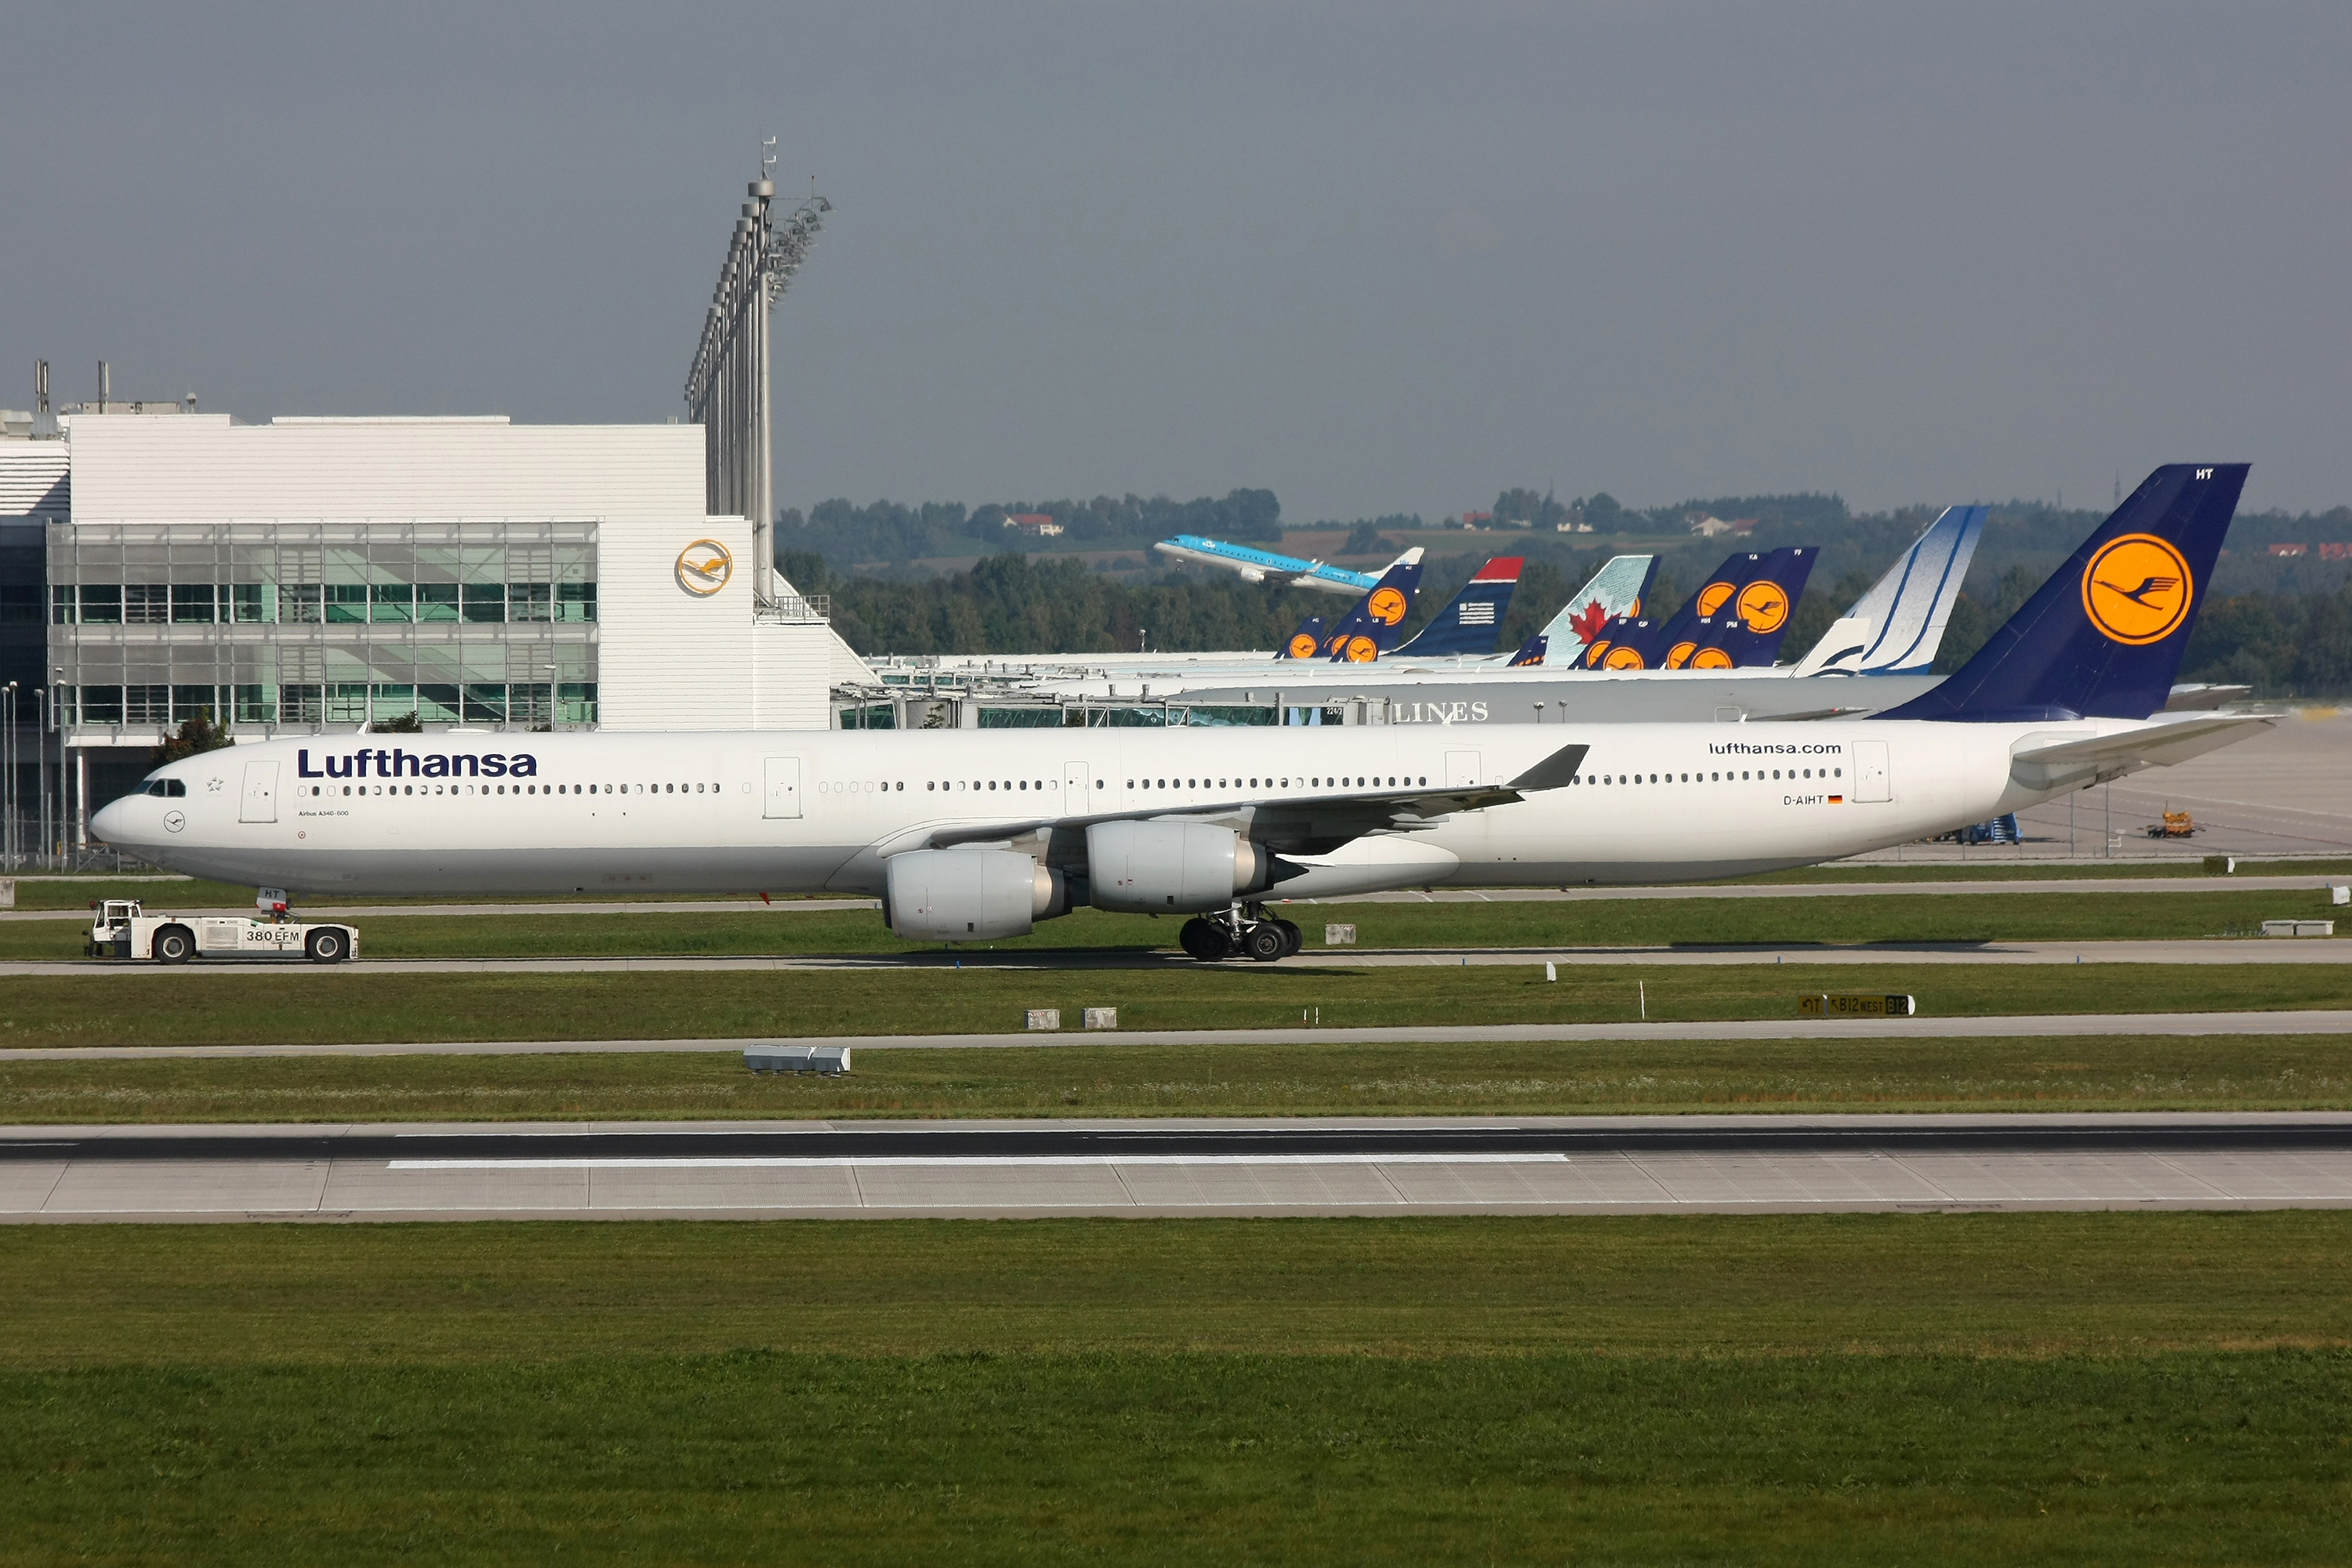 Airbus A340-200/300 next